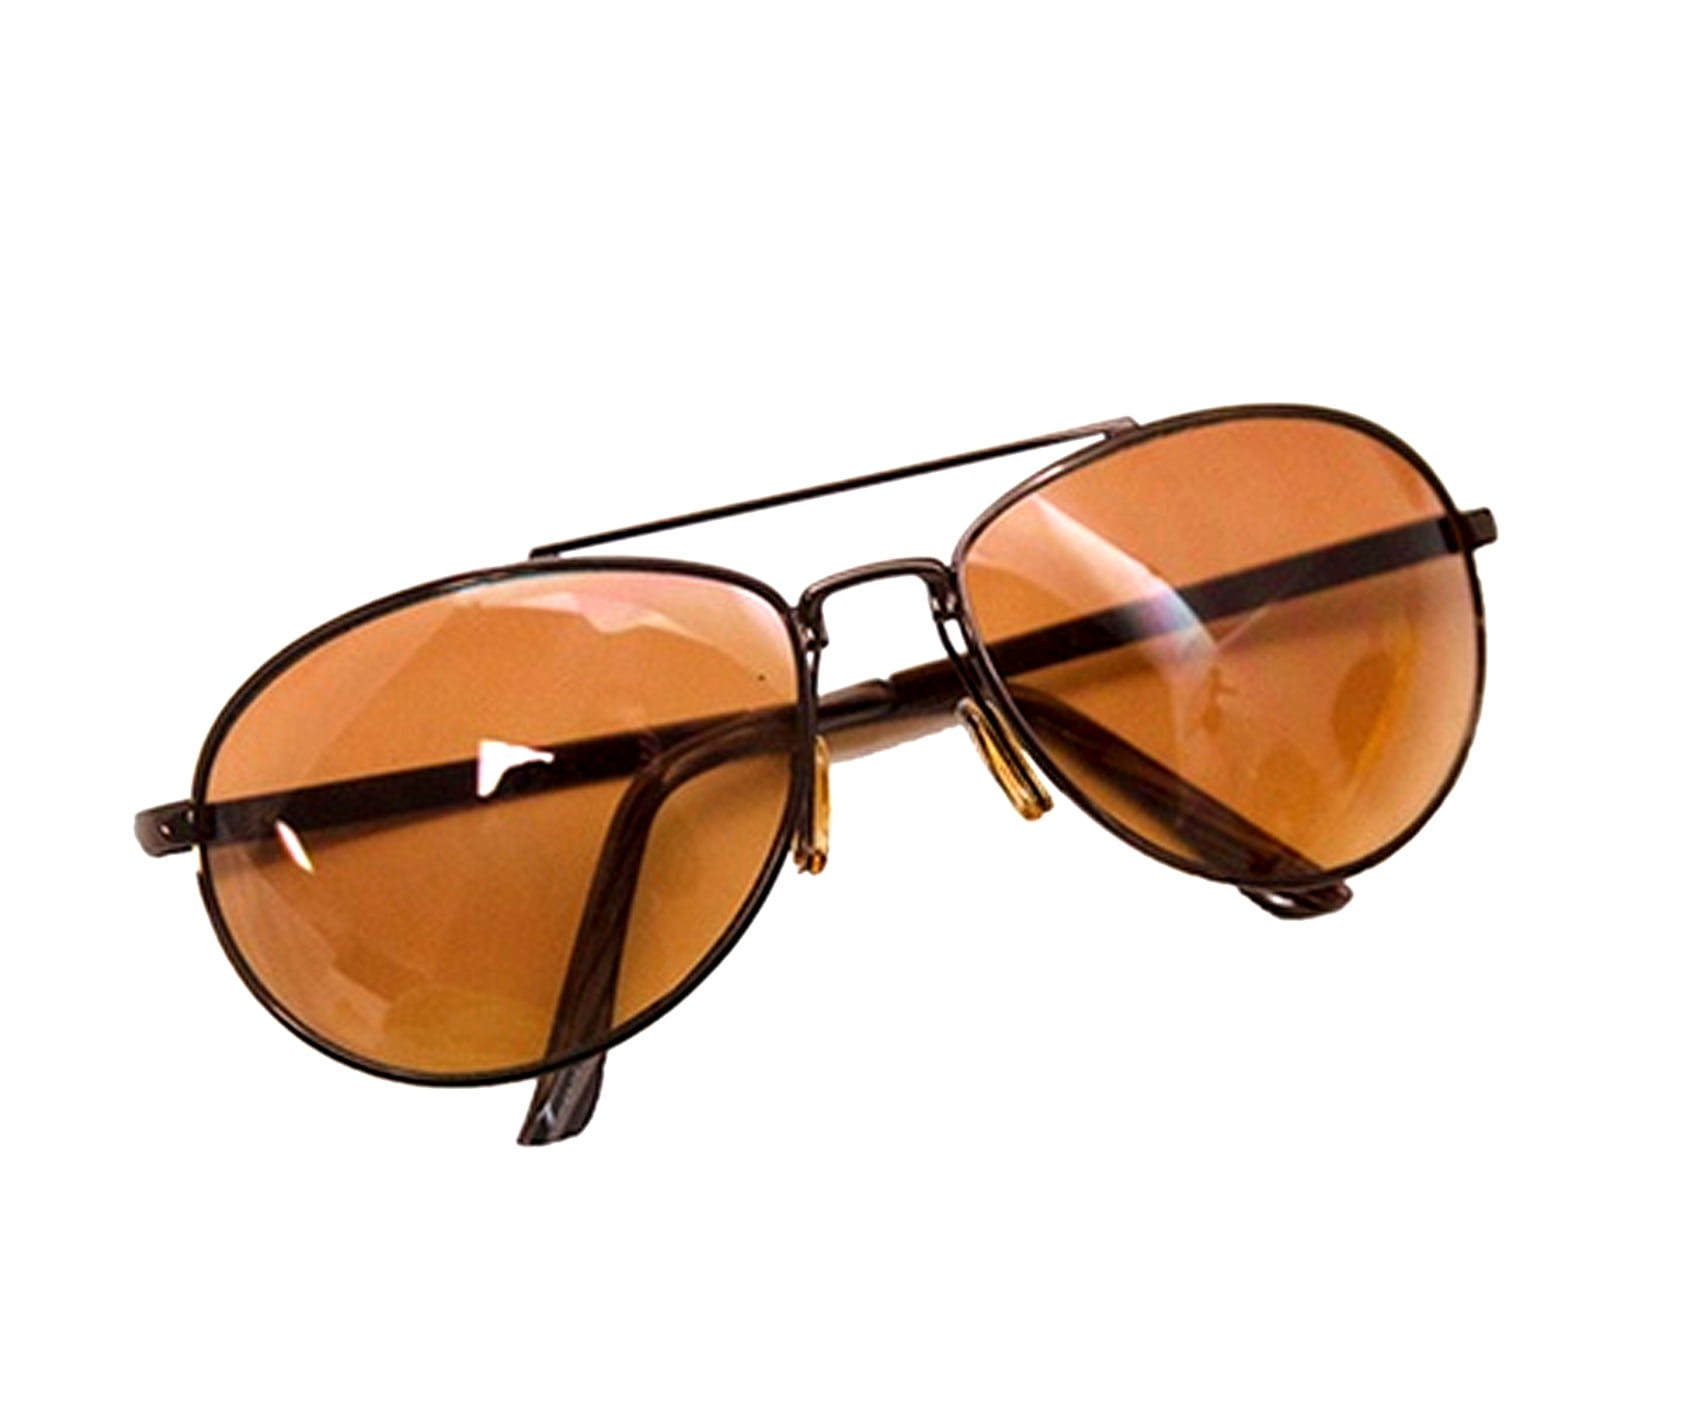 HD Vision Aviators Sunglasses, Bronze (Single)